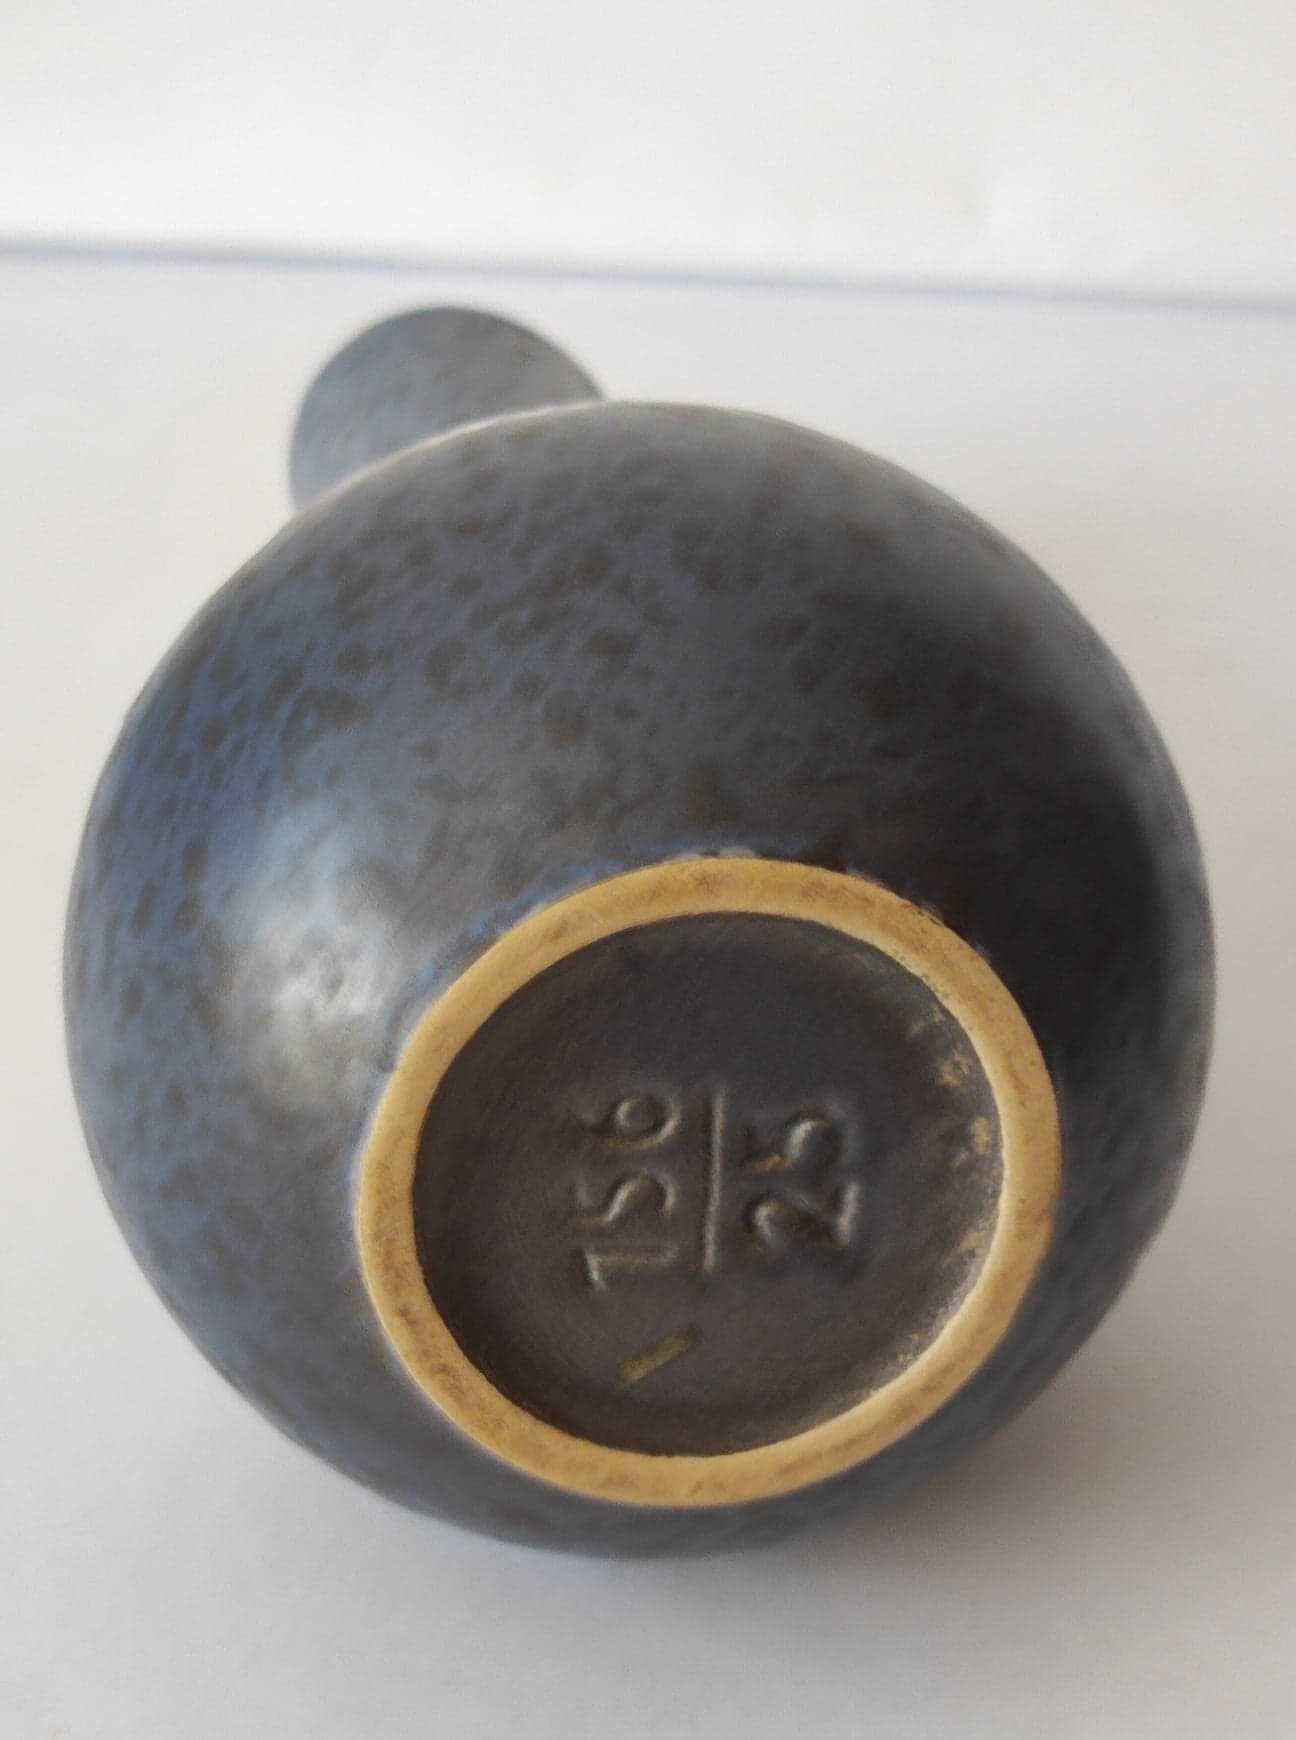 Stara kolekcjonerska ceramika niemiecka wazon Ilkra 156/25 Design WGP